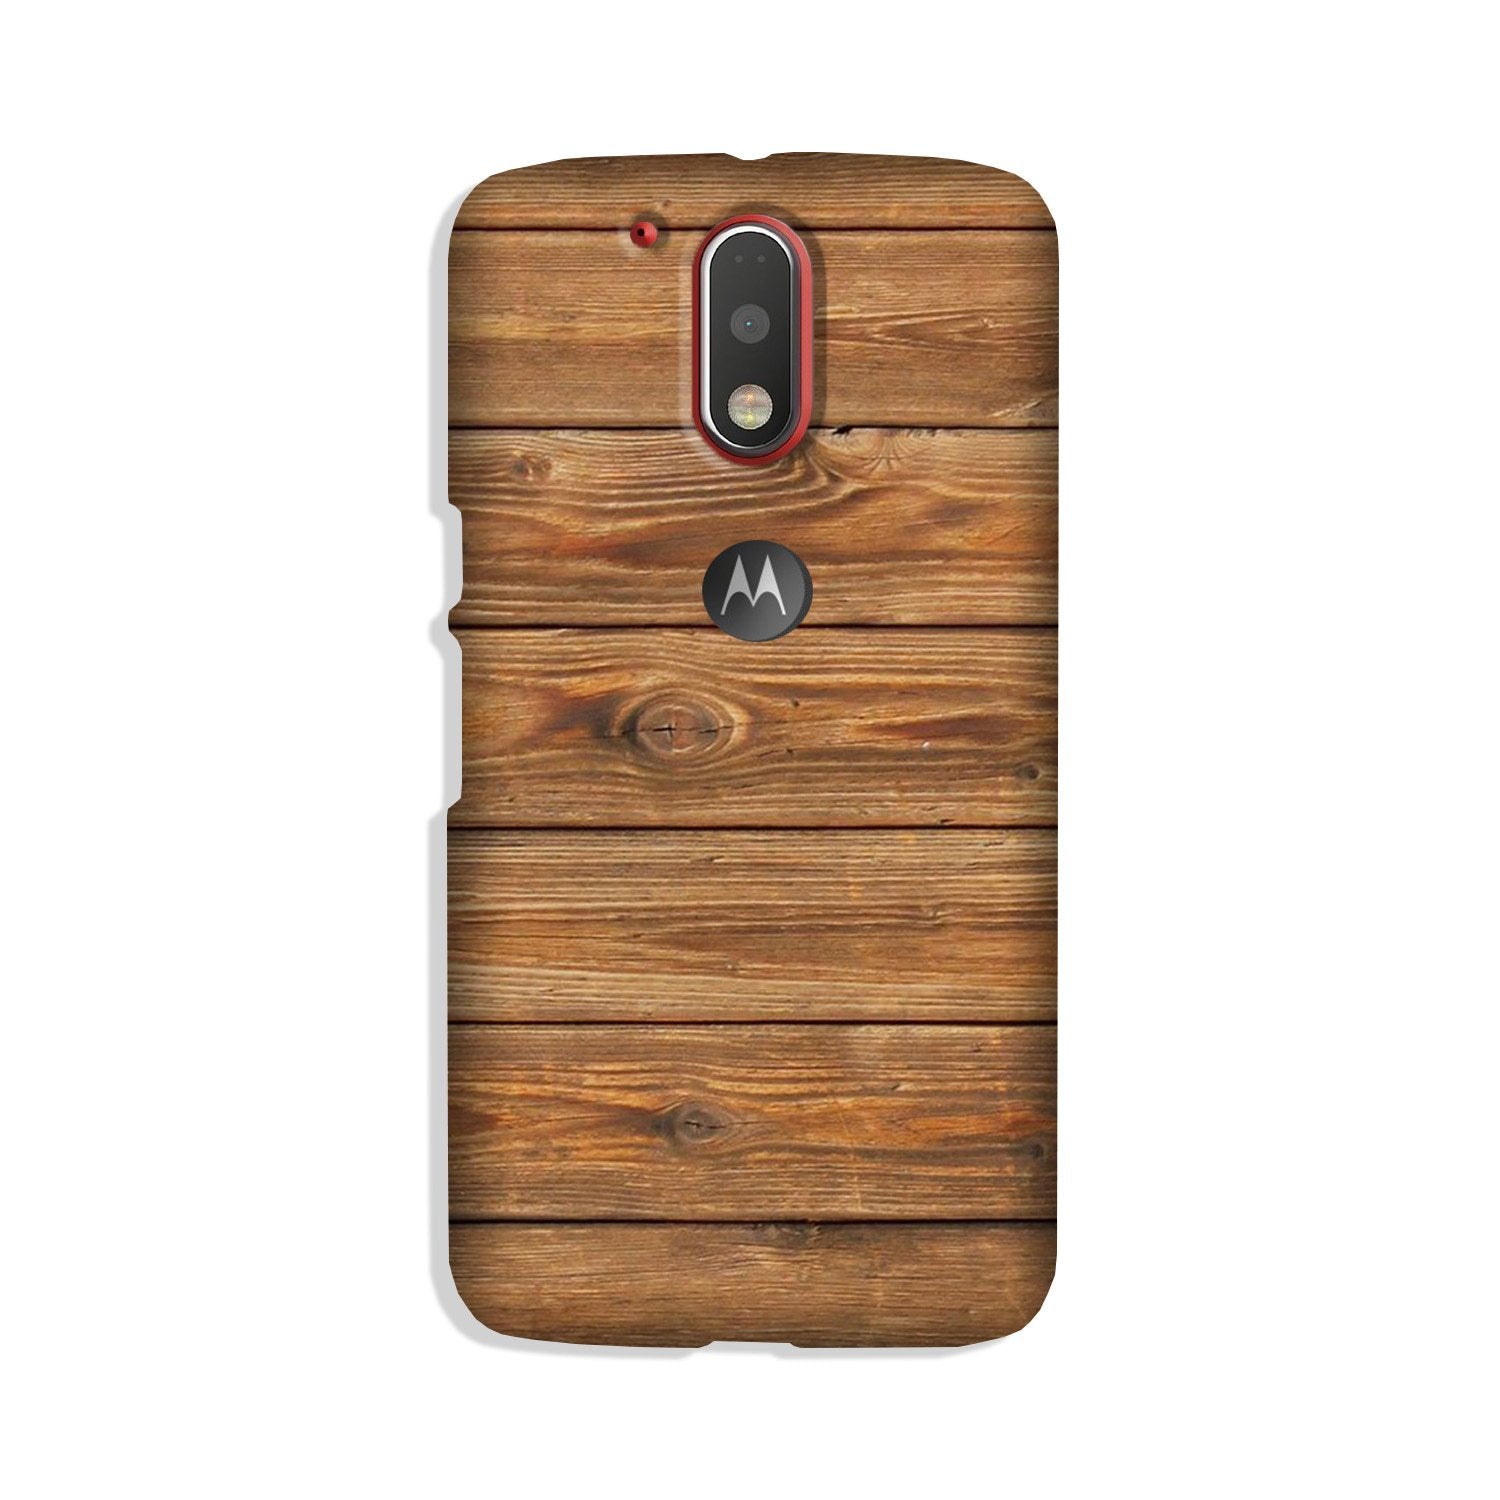 Wooden Look Case for Moto G4 Plus  (Design - 113)